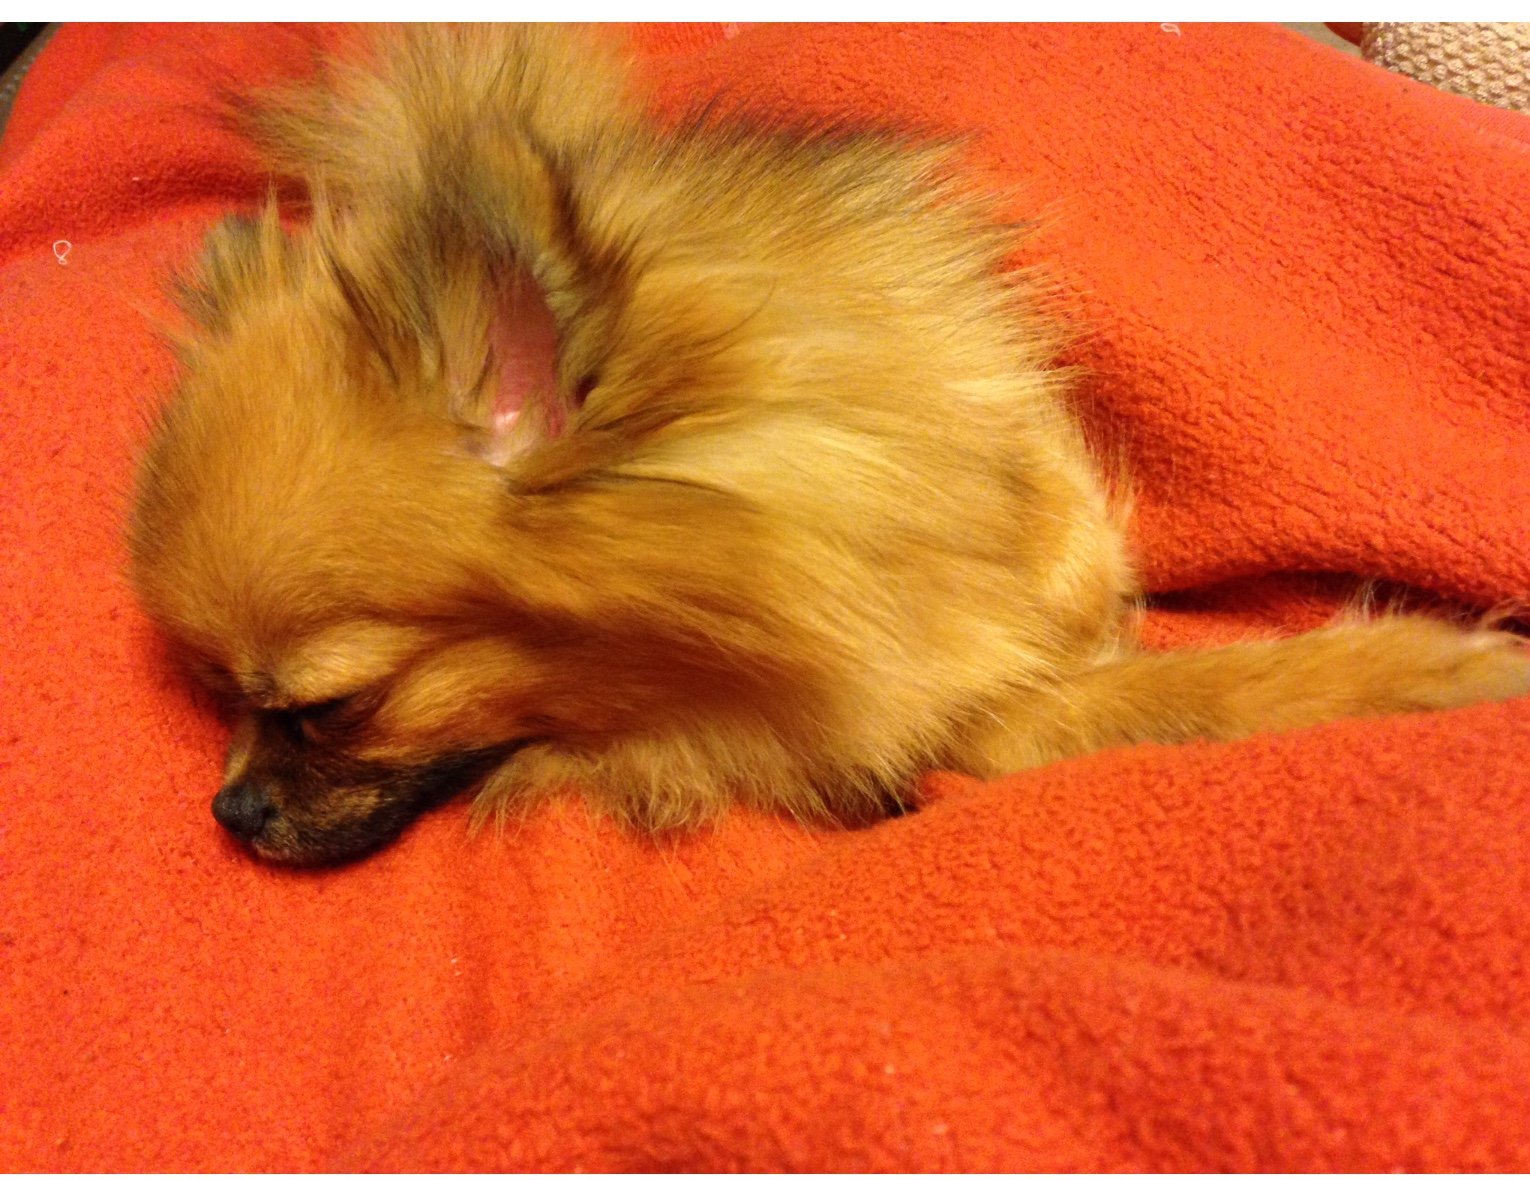 Pomeranian snuggled up in blanket sleeping